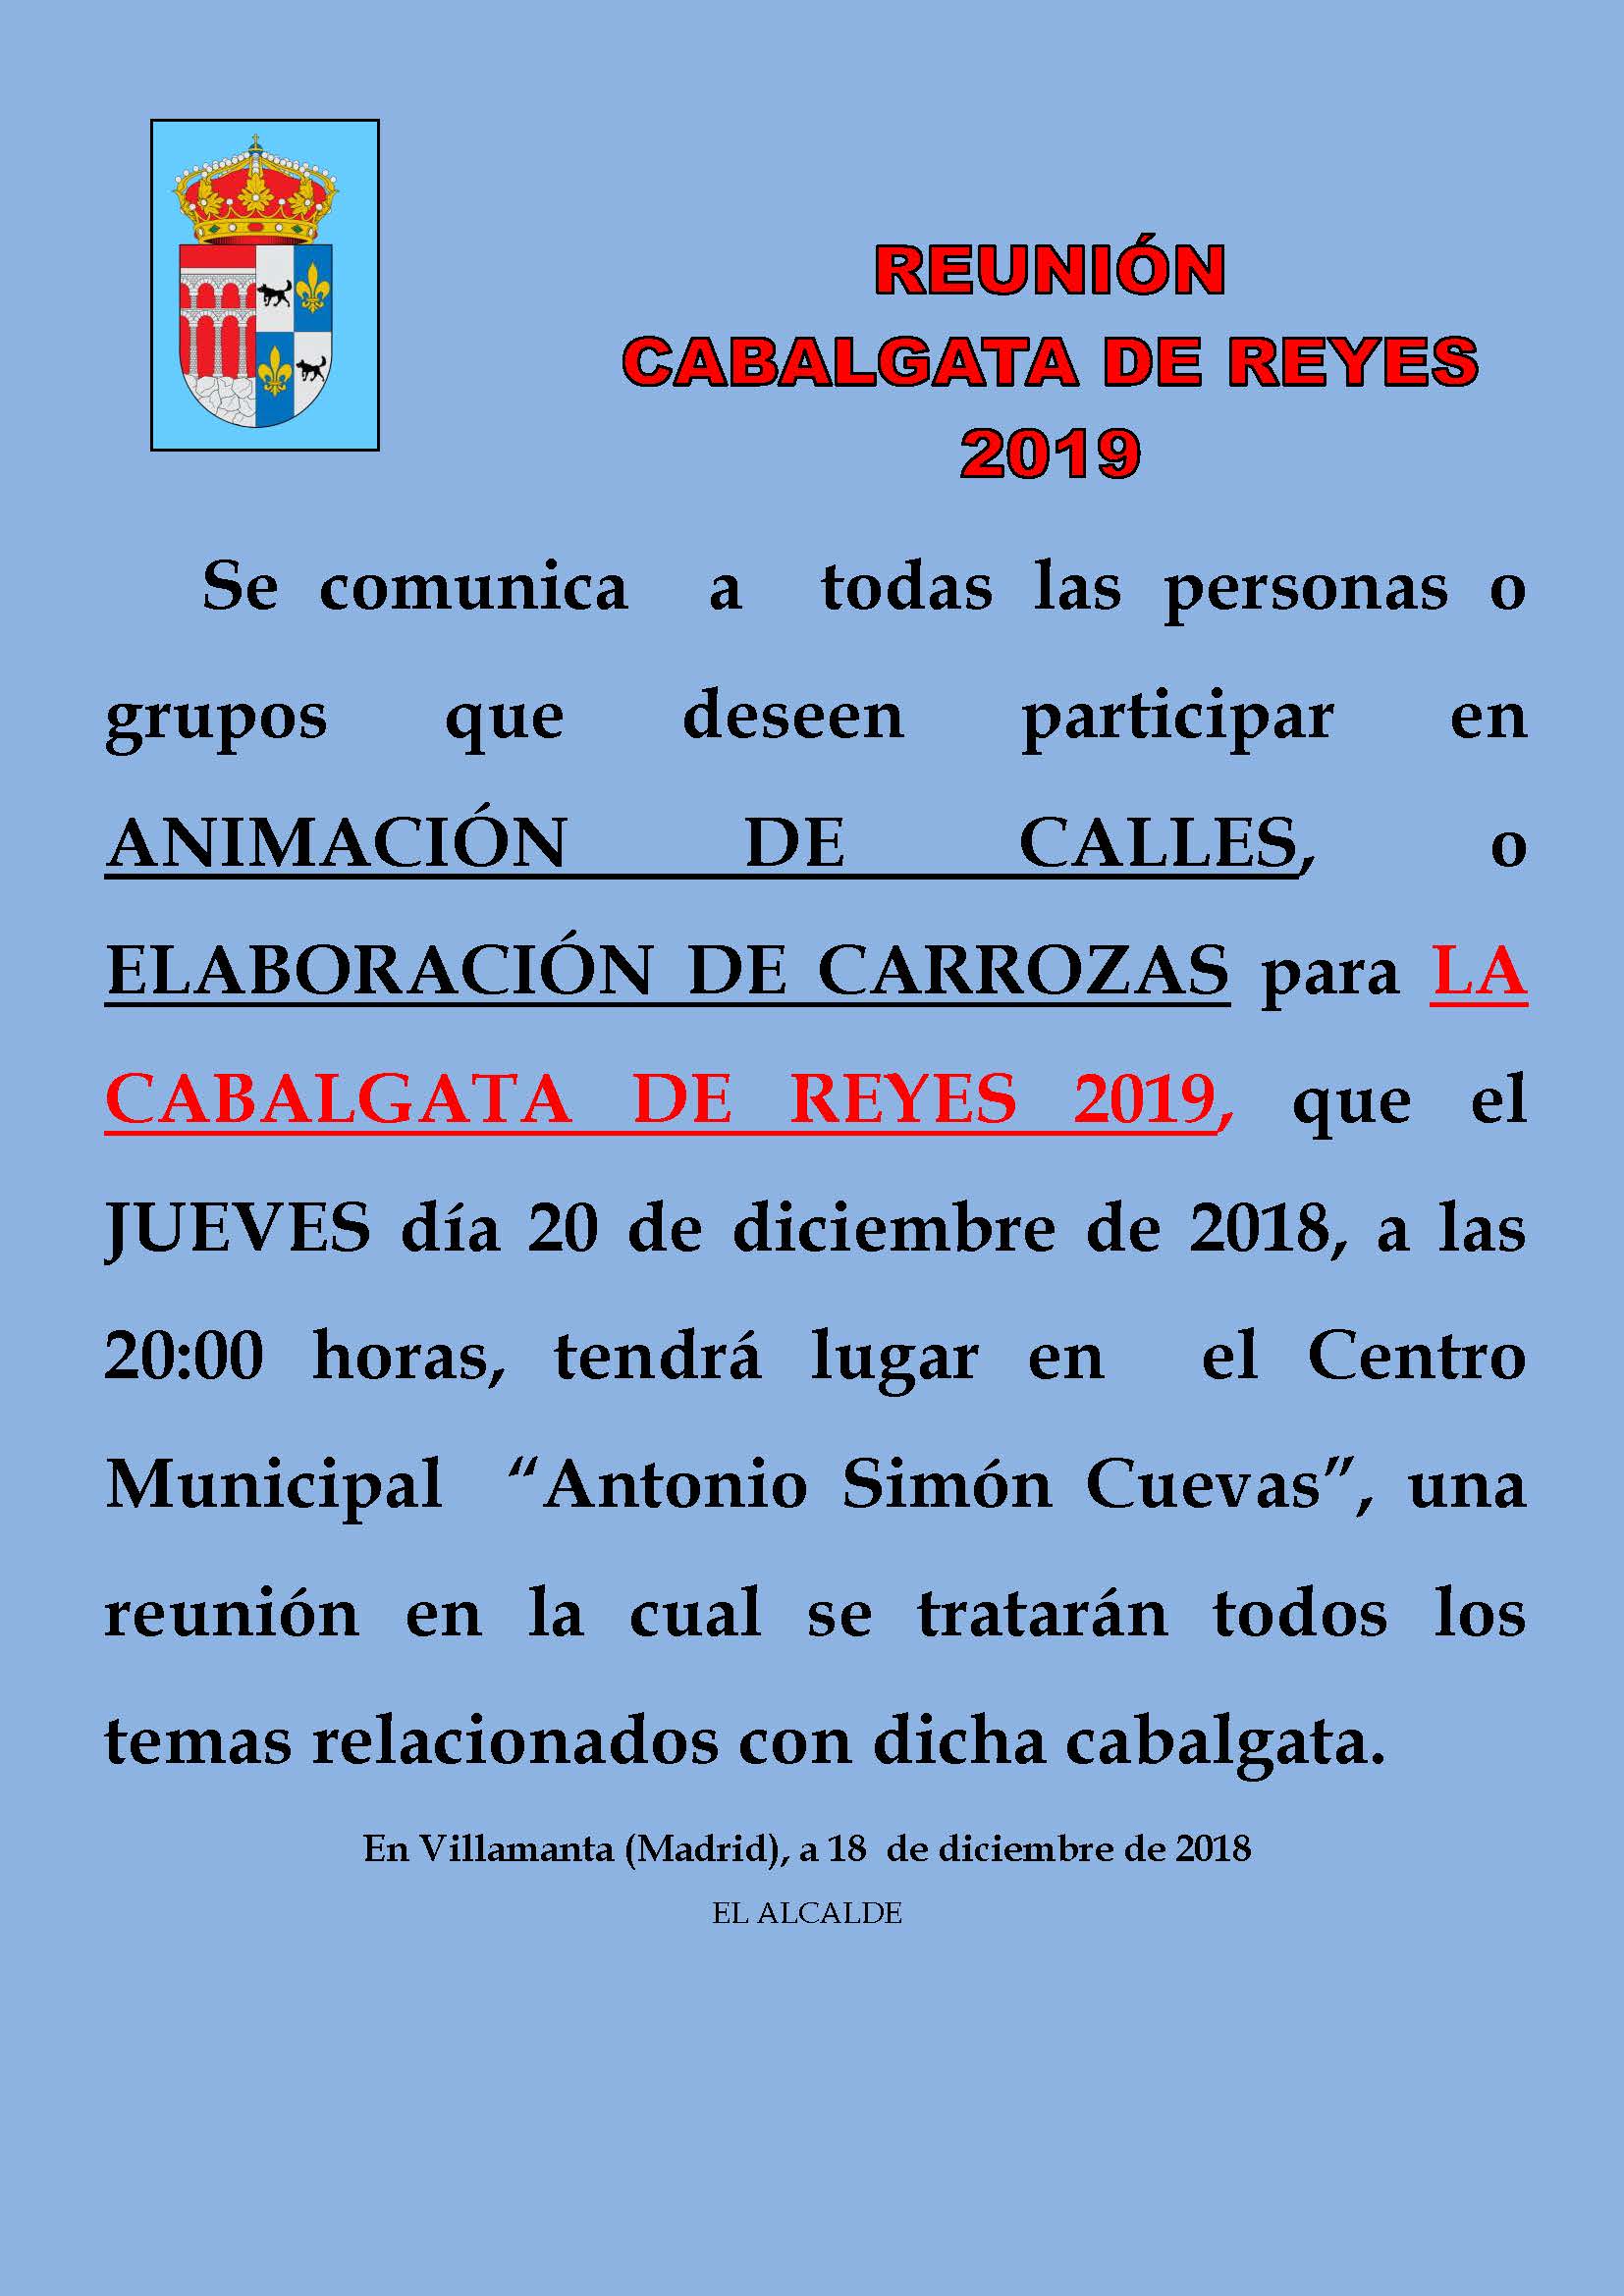 Reunion Cabalgata de reyes 2019